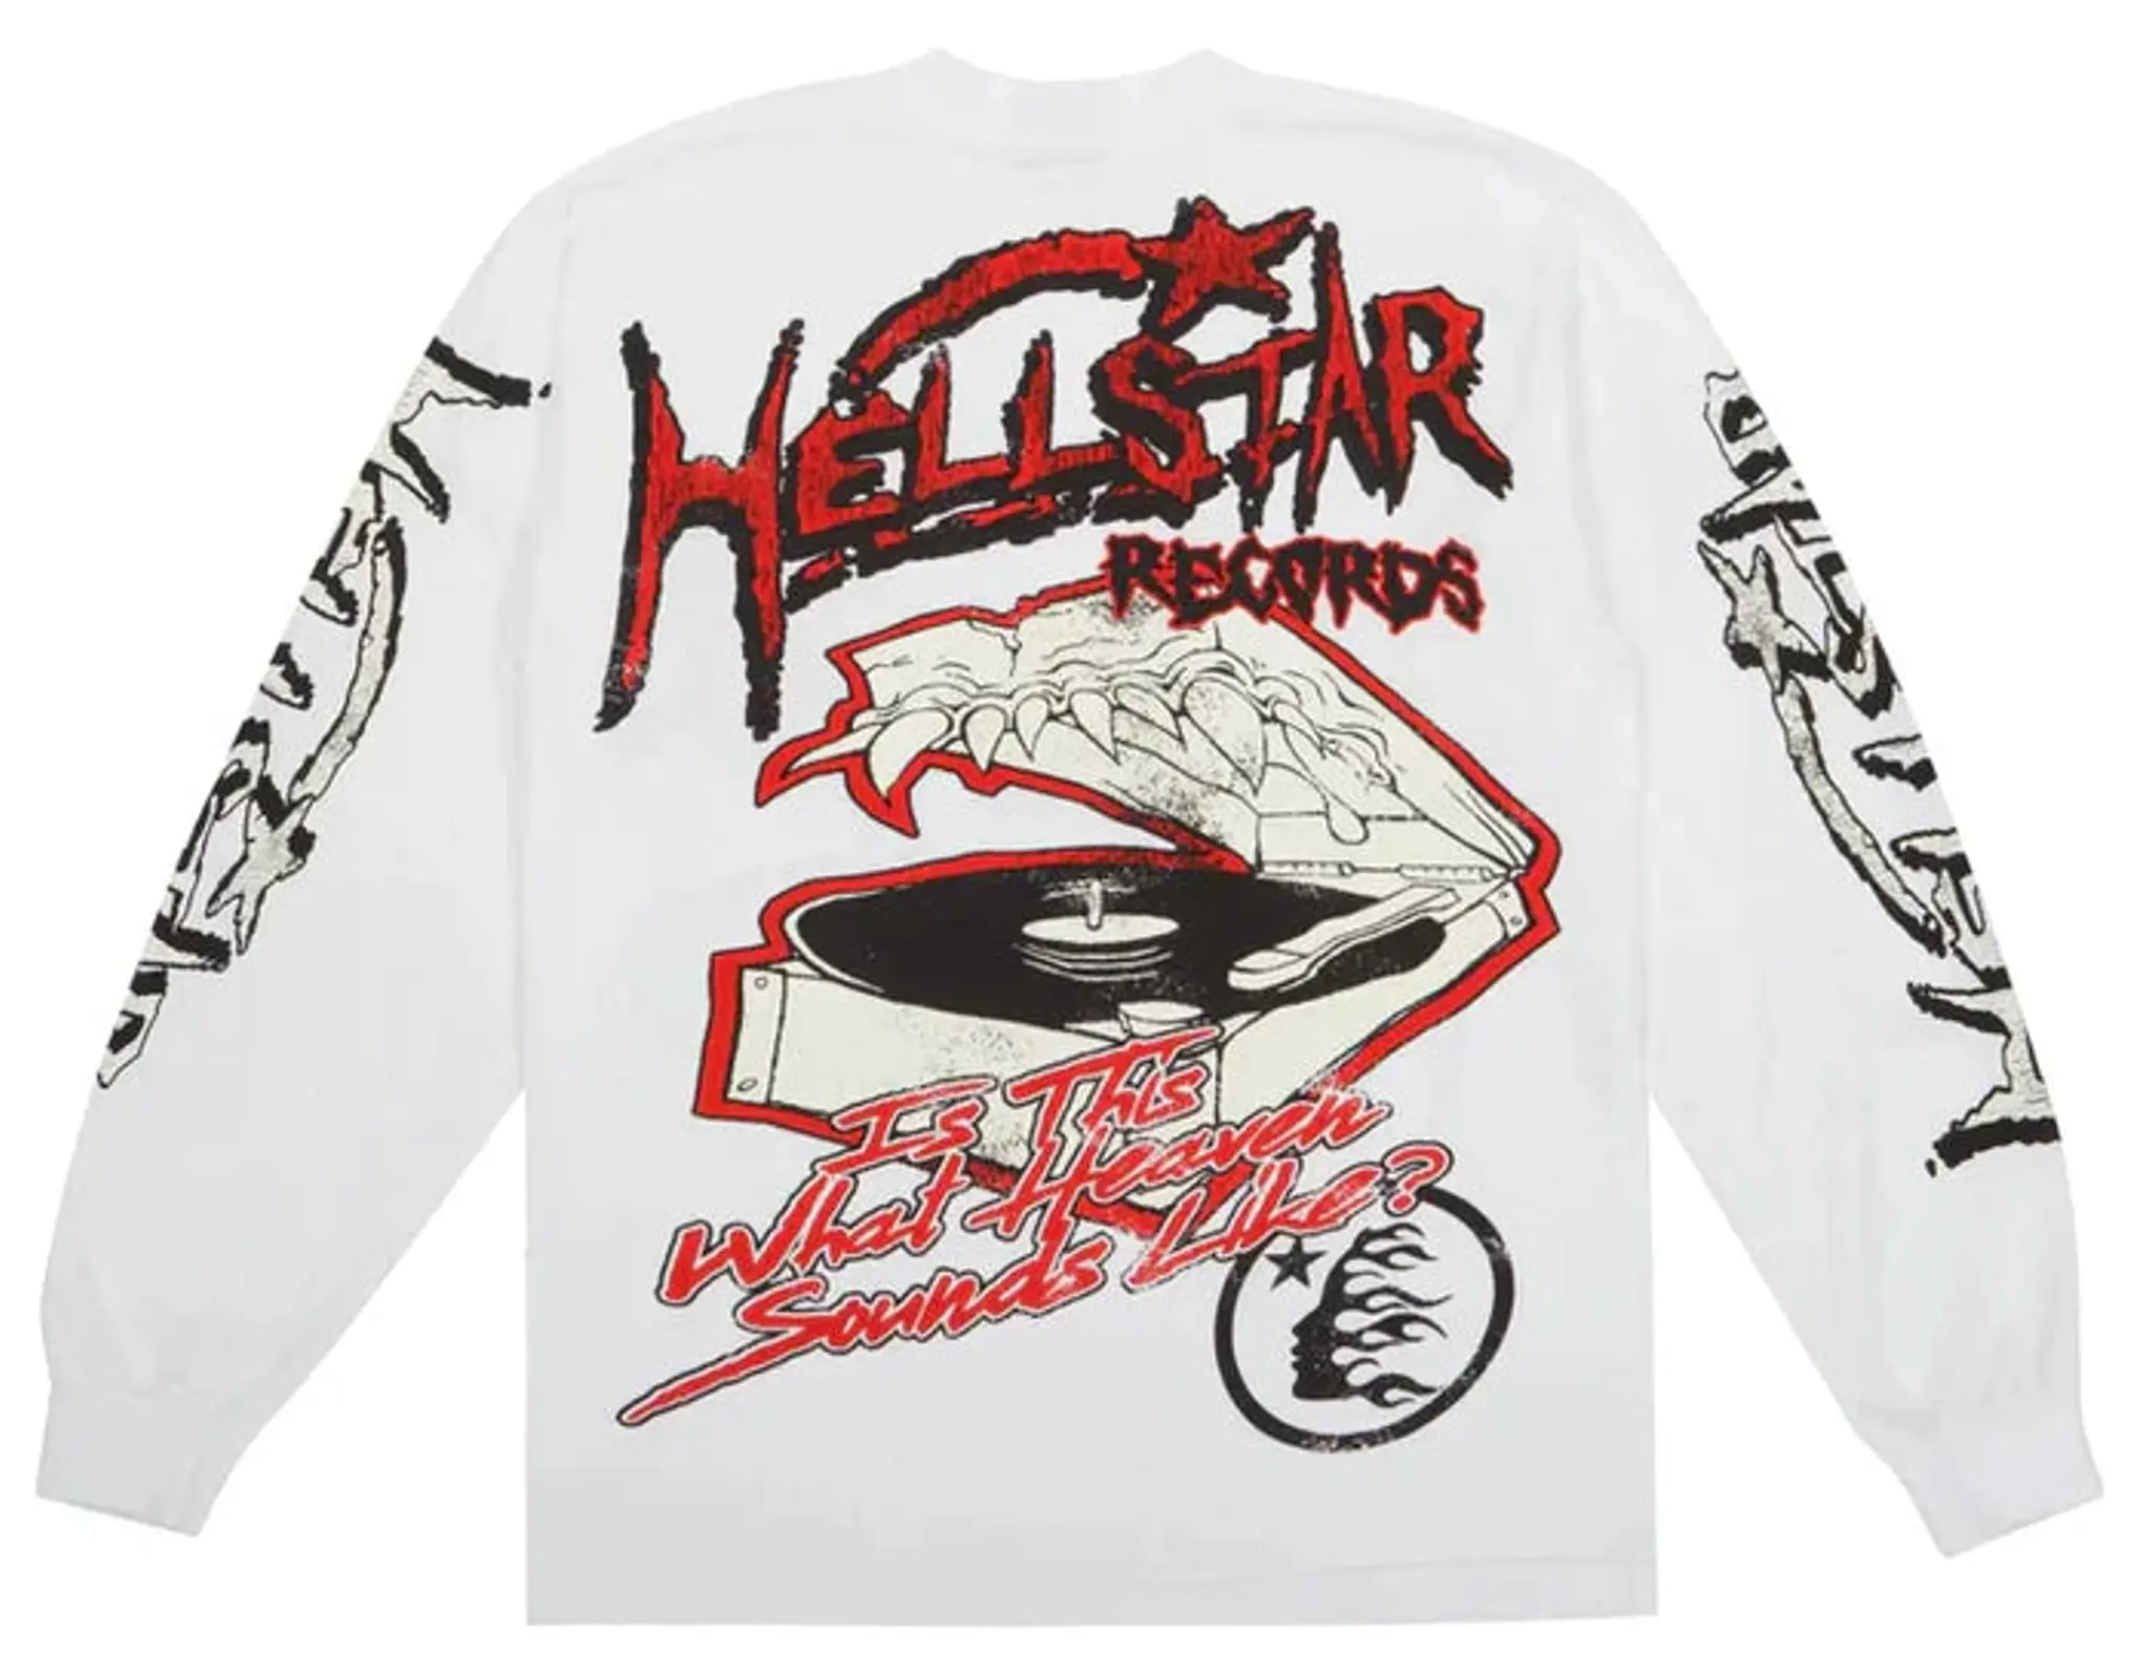 Hellstar Records Love Sleeve White